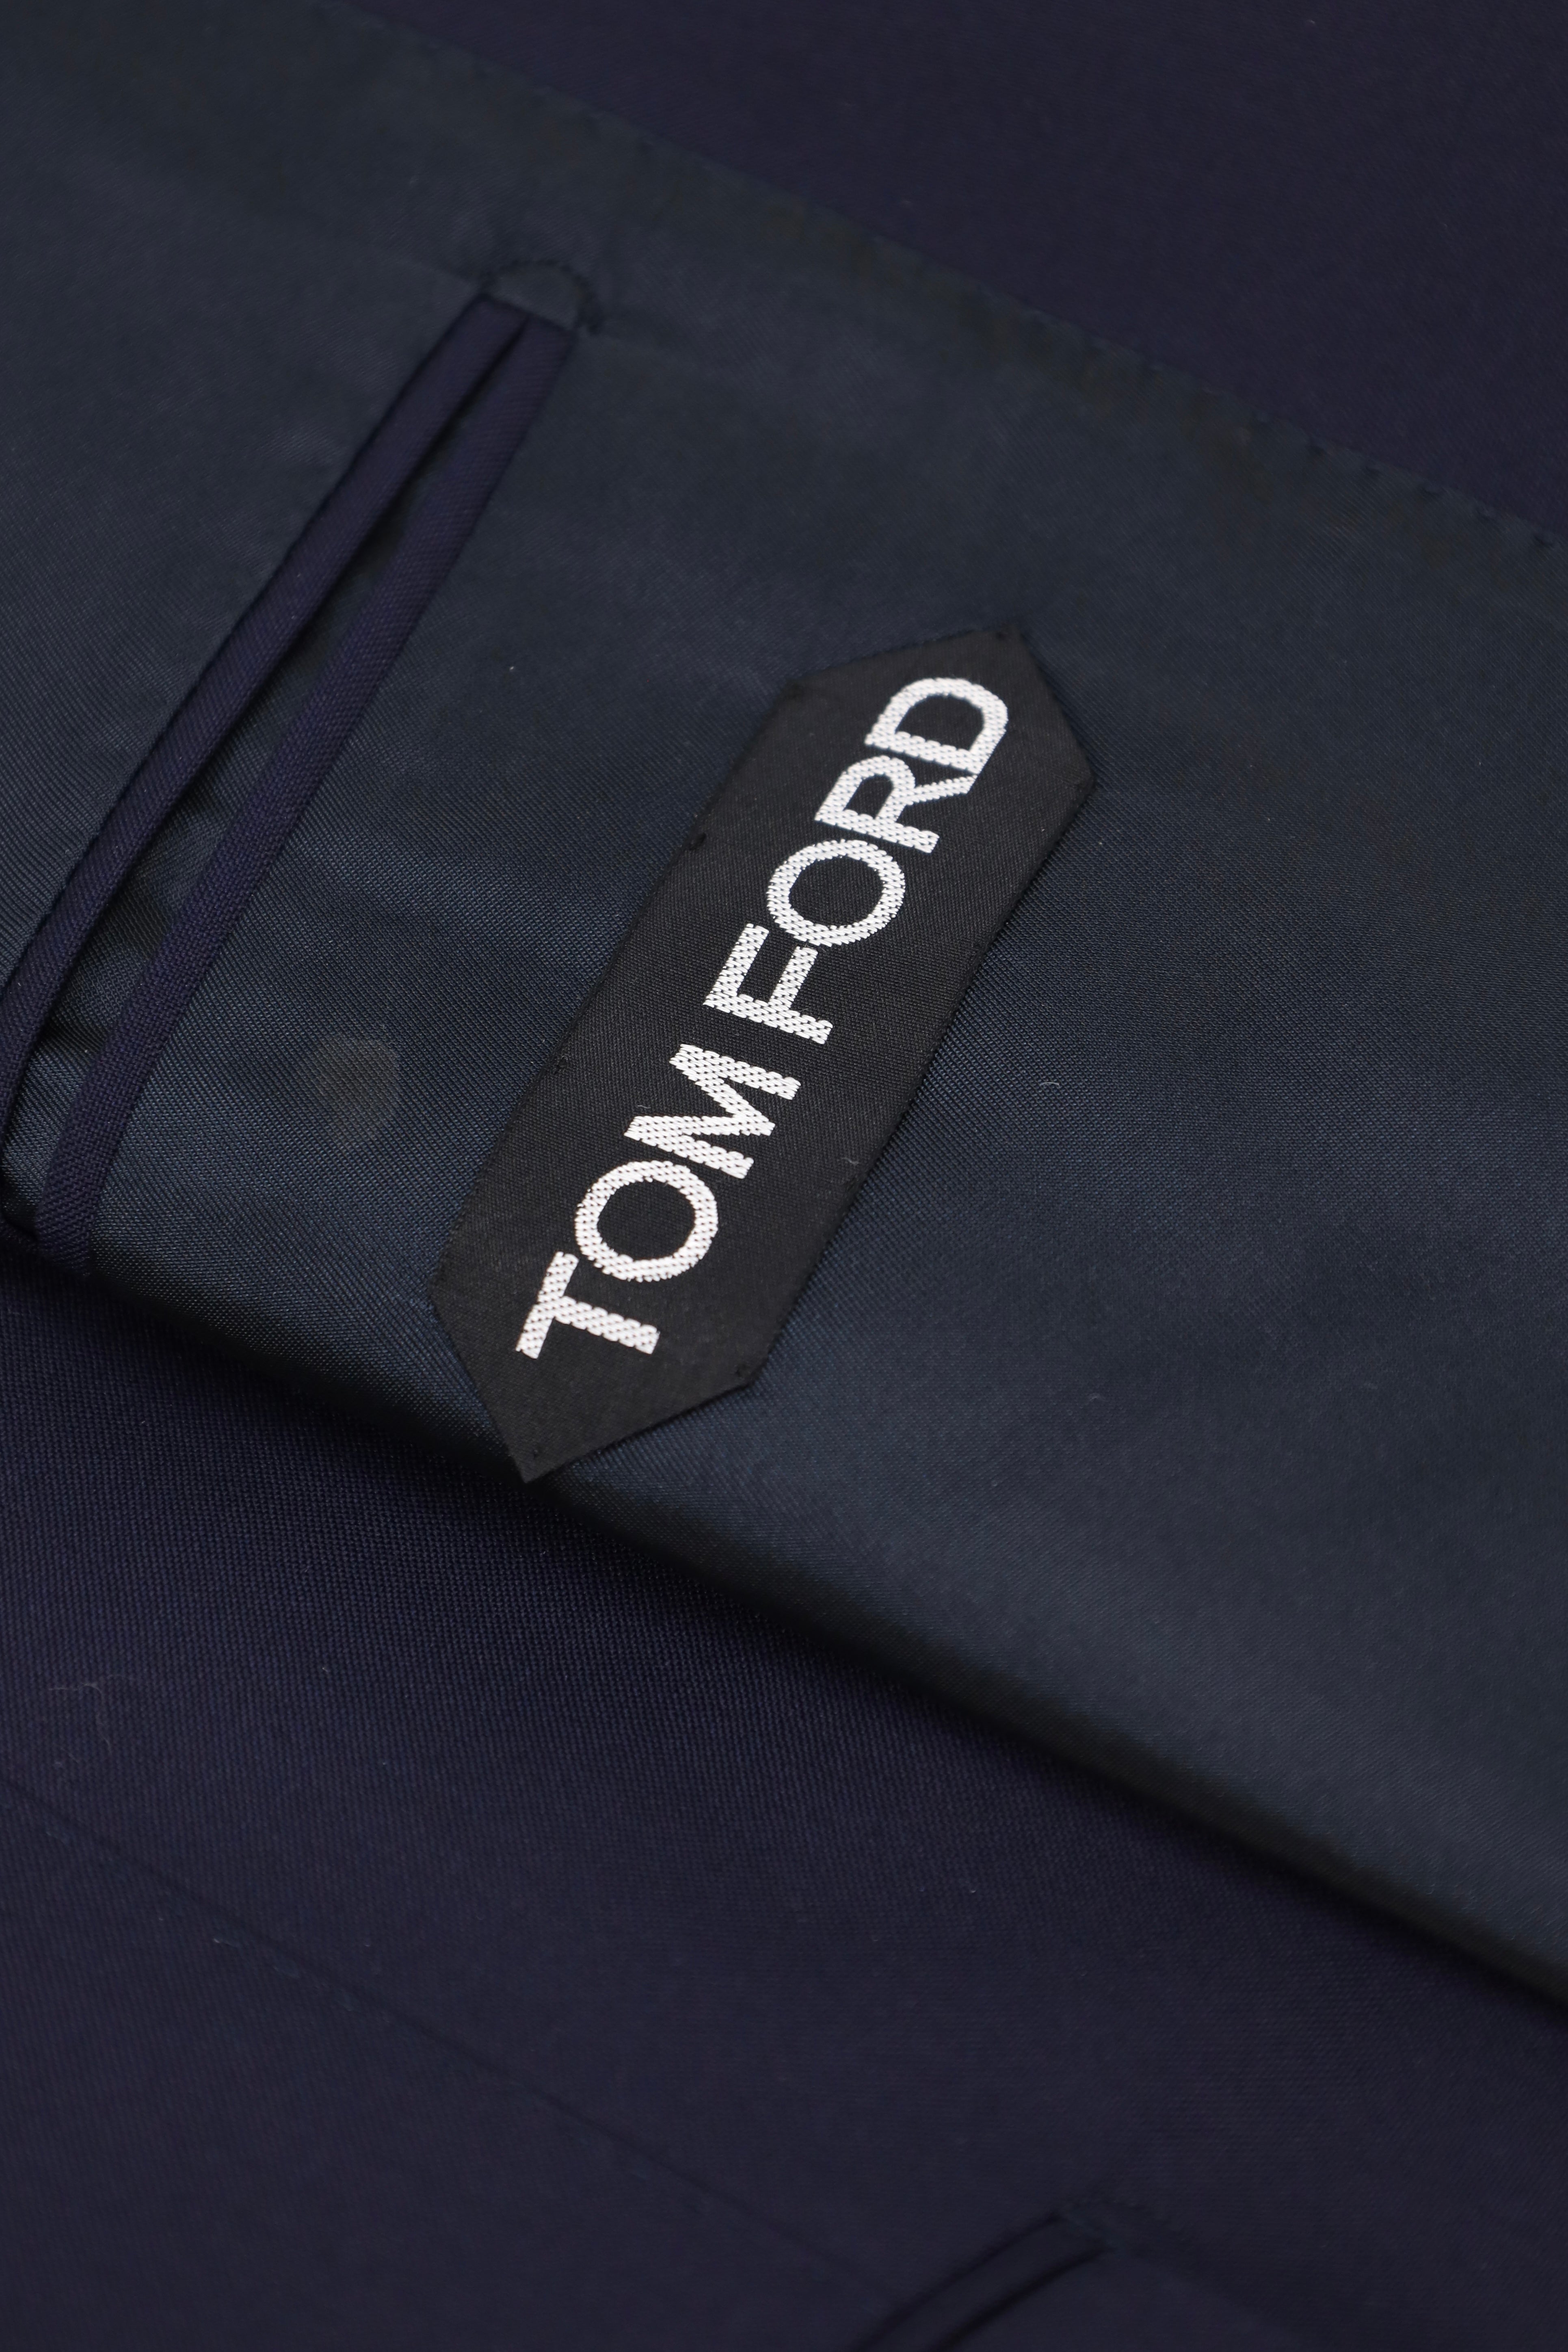 Tom Ford Navy Shelton Suit